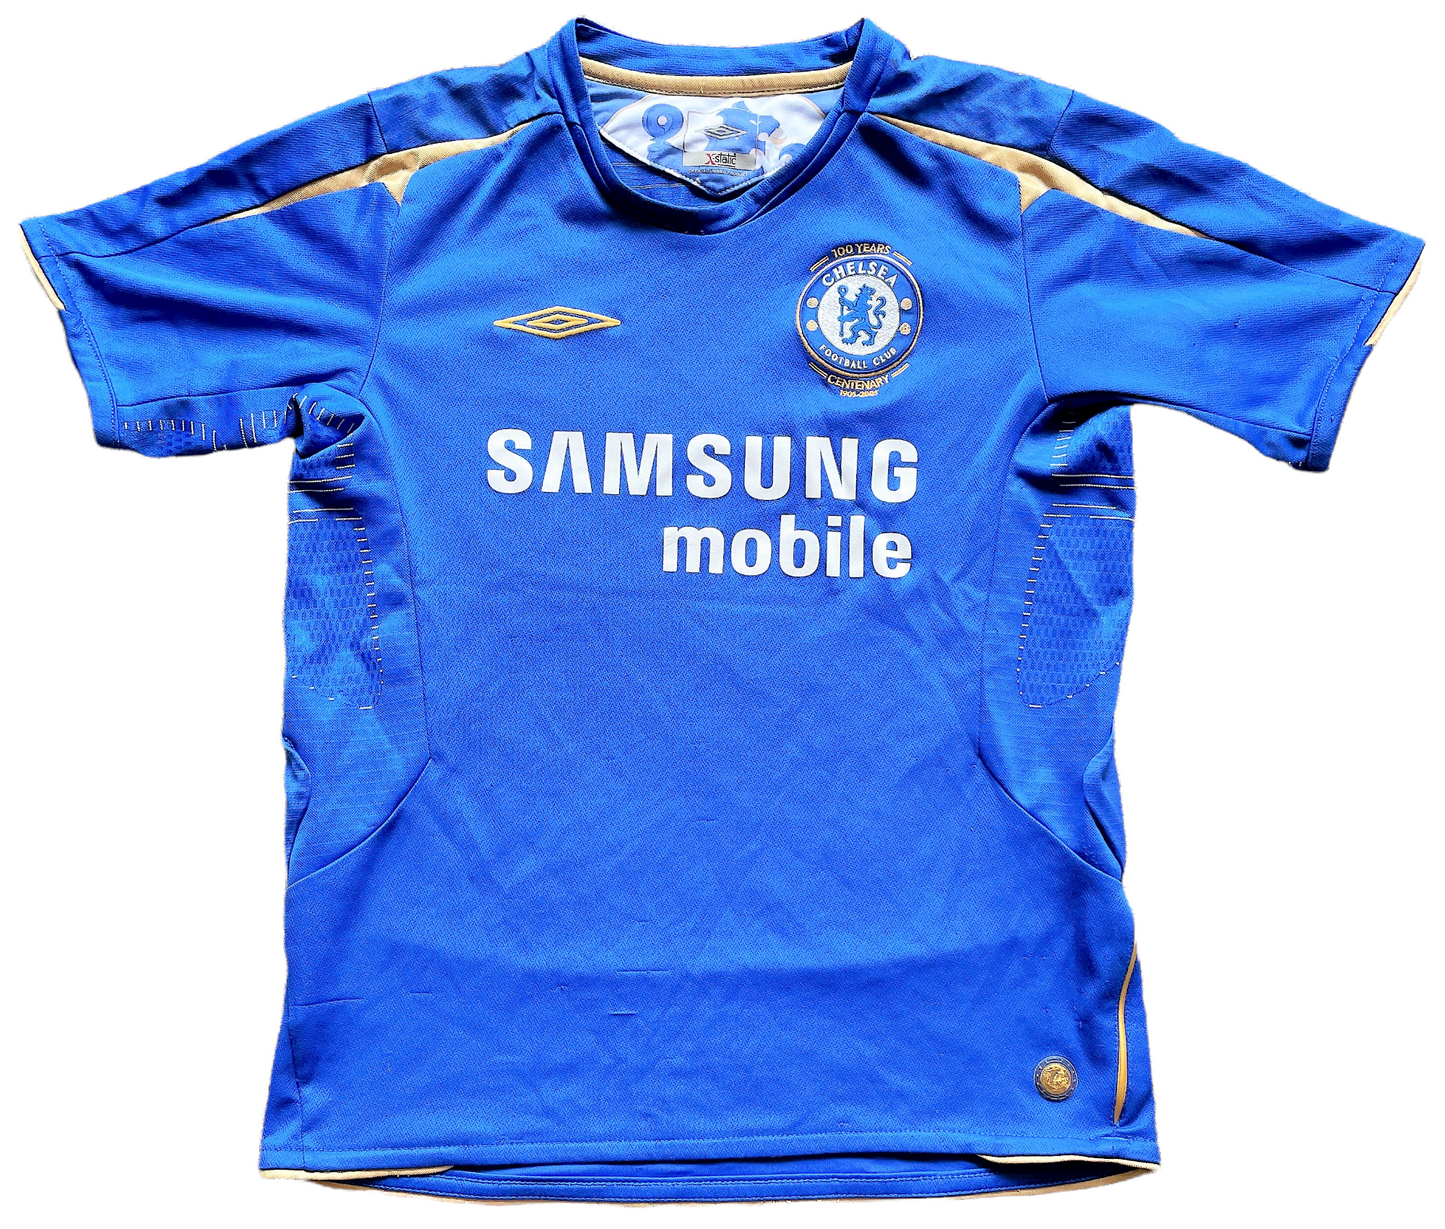 2005-06 Chelsea Home Shirt (good) Medium Boys.